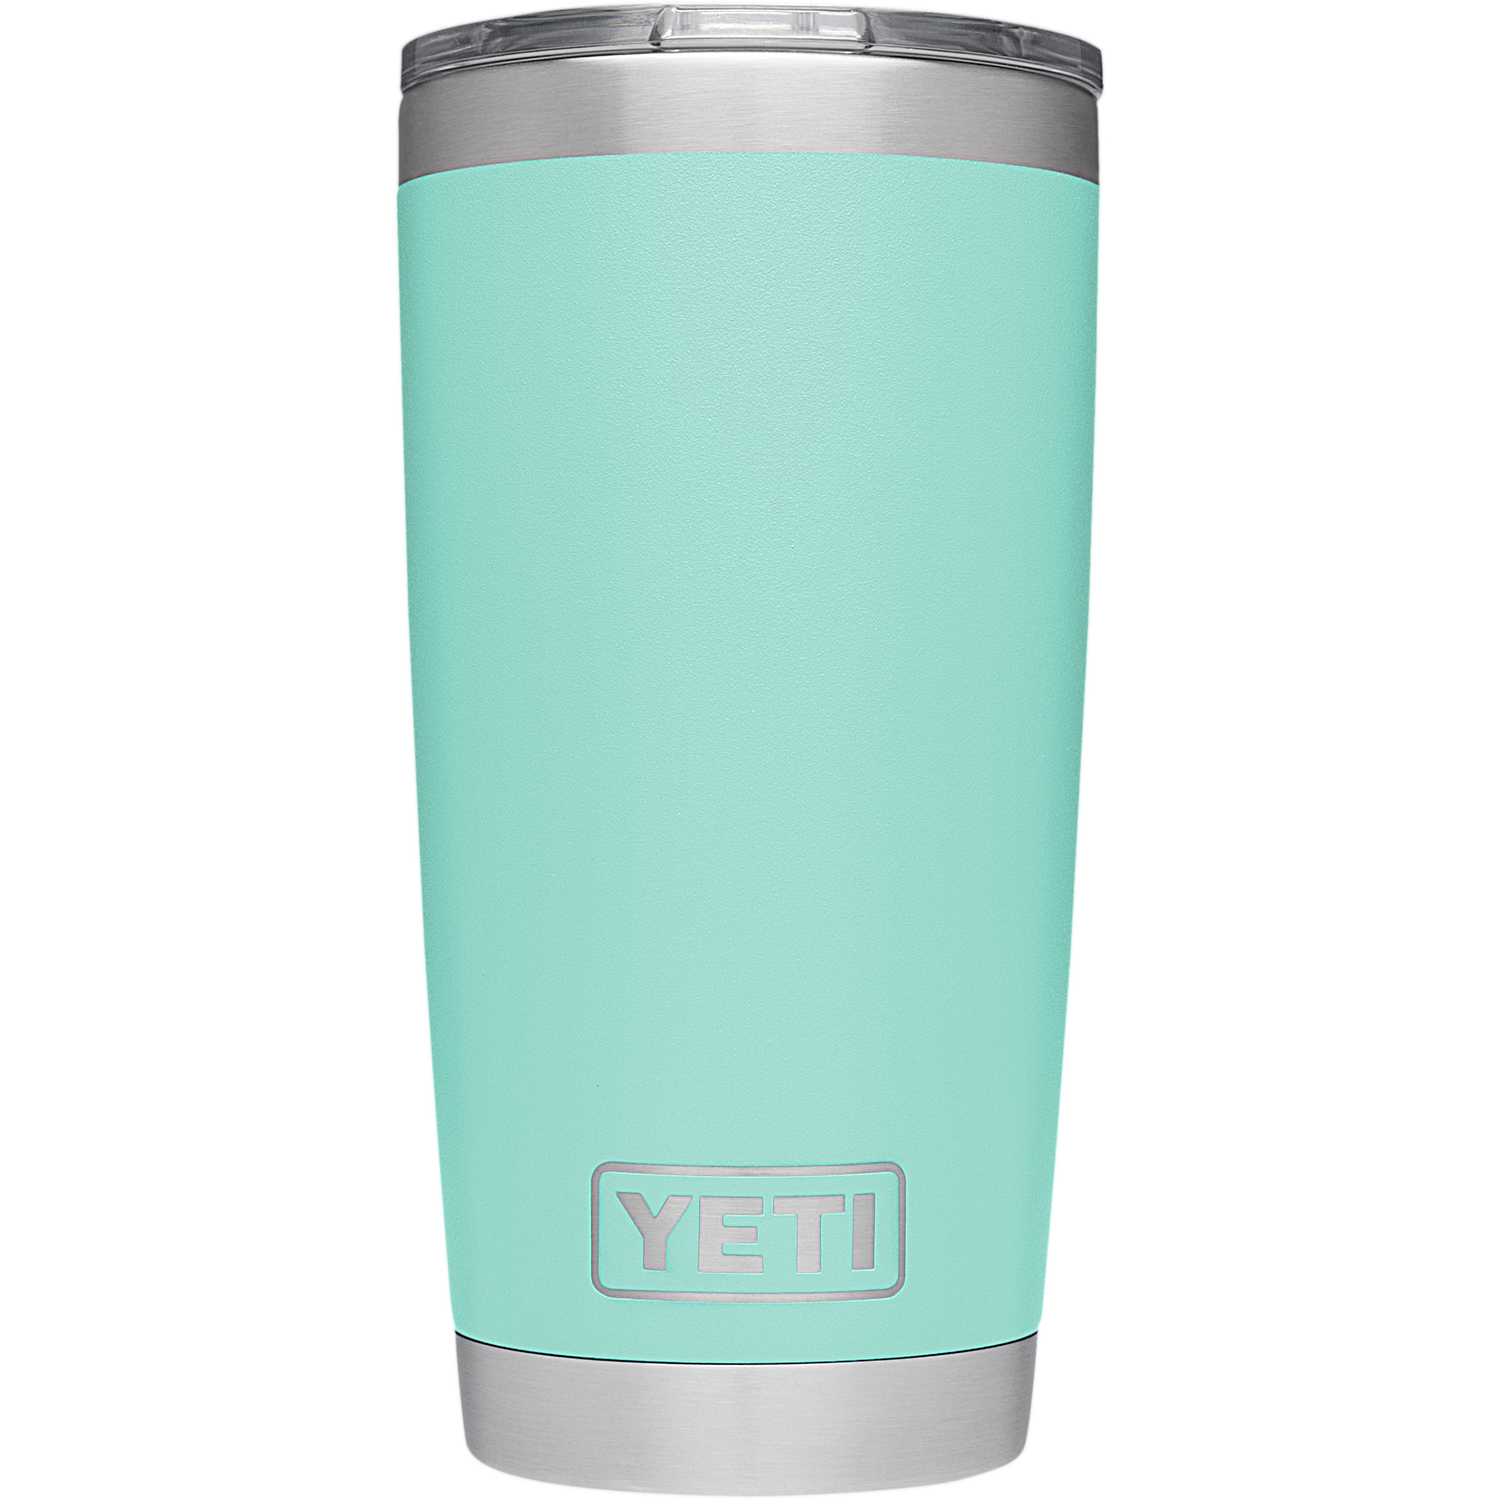 yeti cups on sale